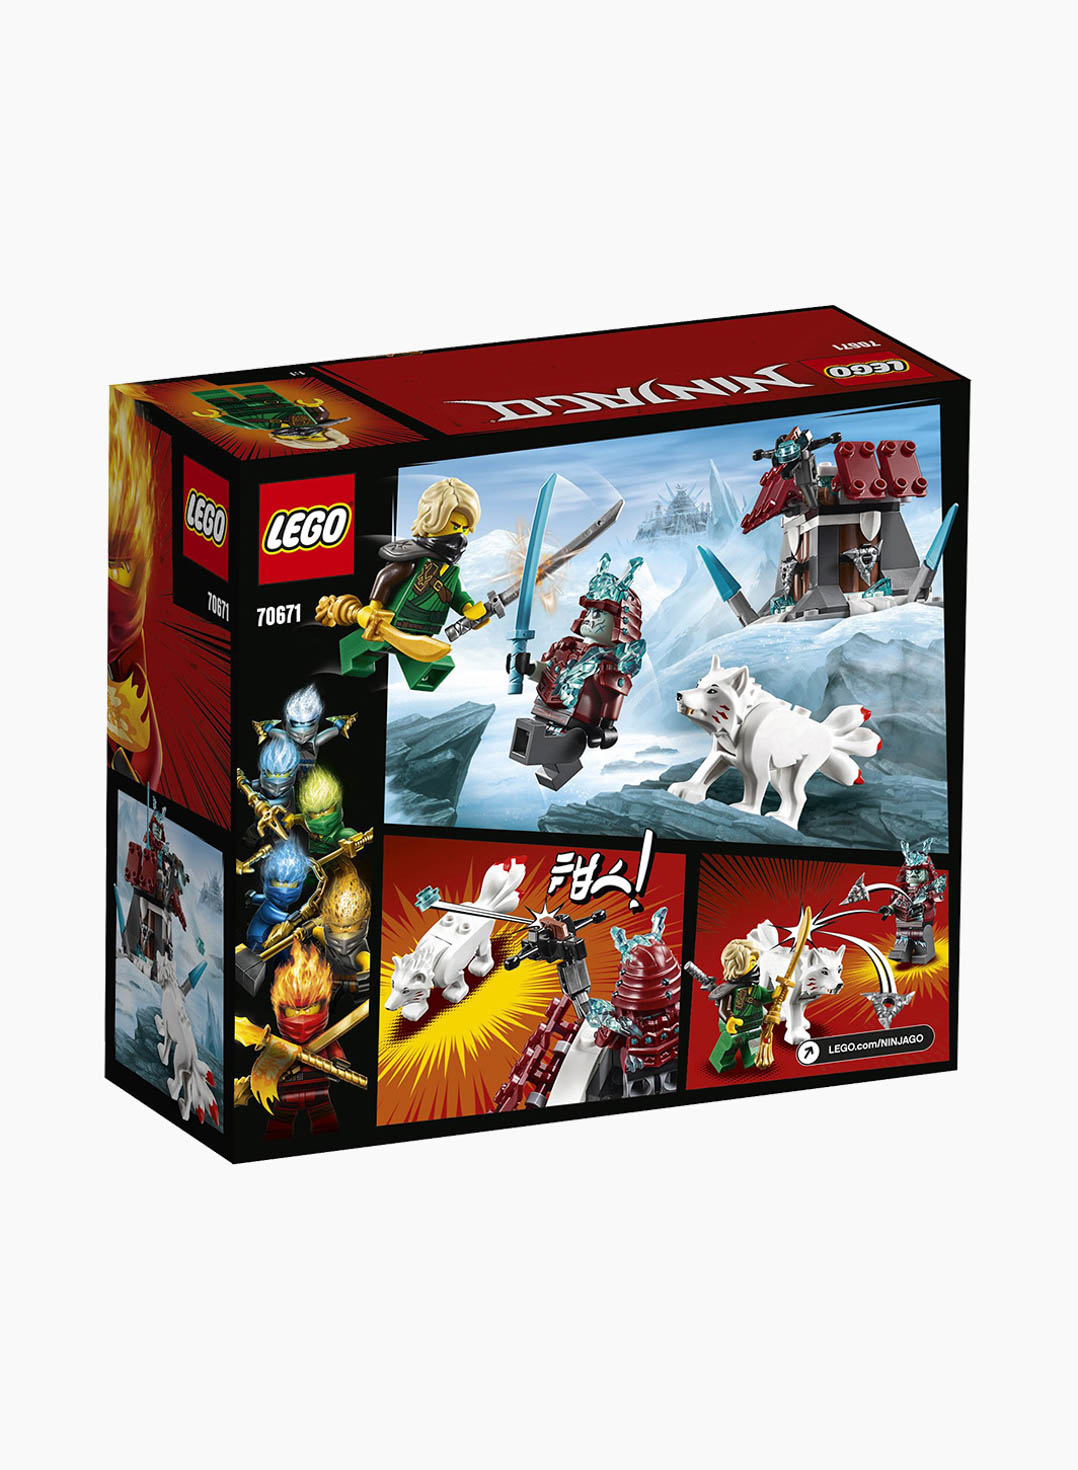 Lego Ninjago Constructor Lloyds Journey